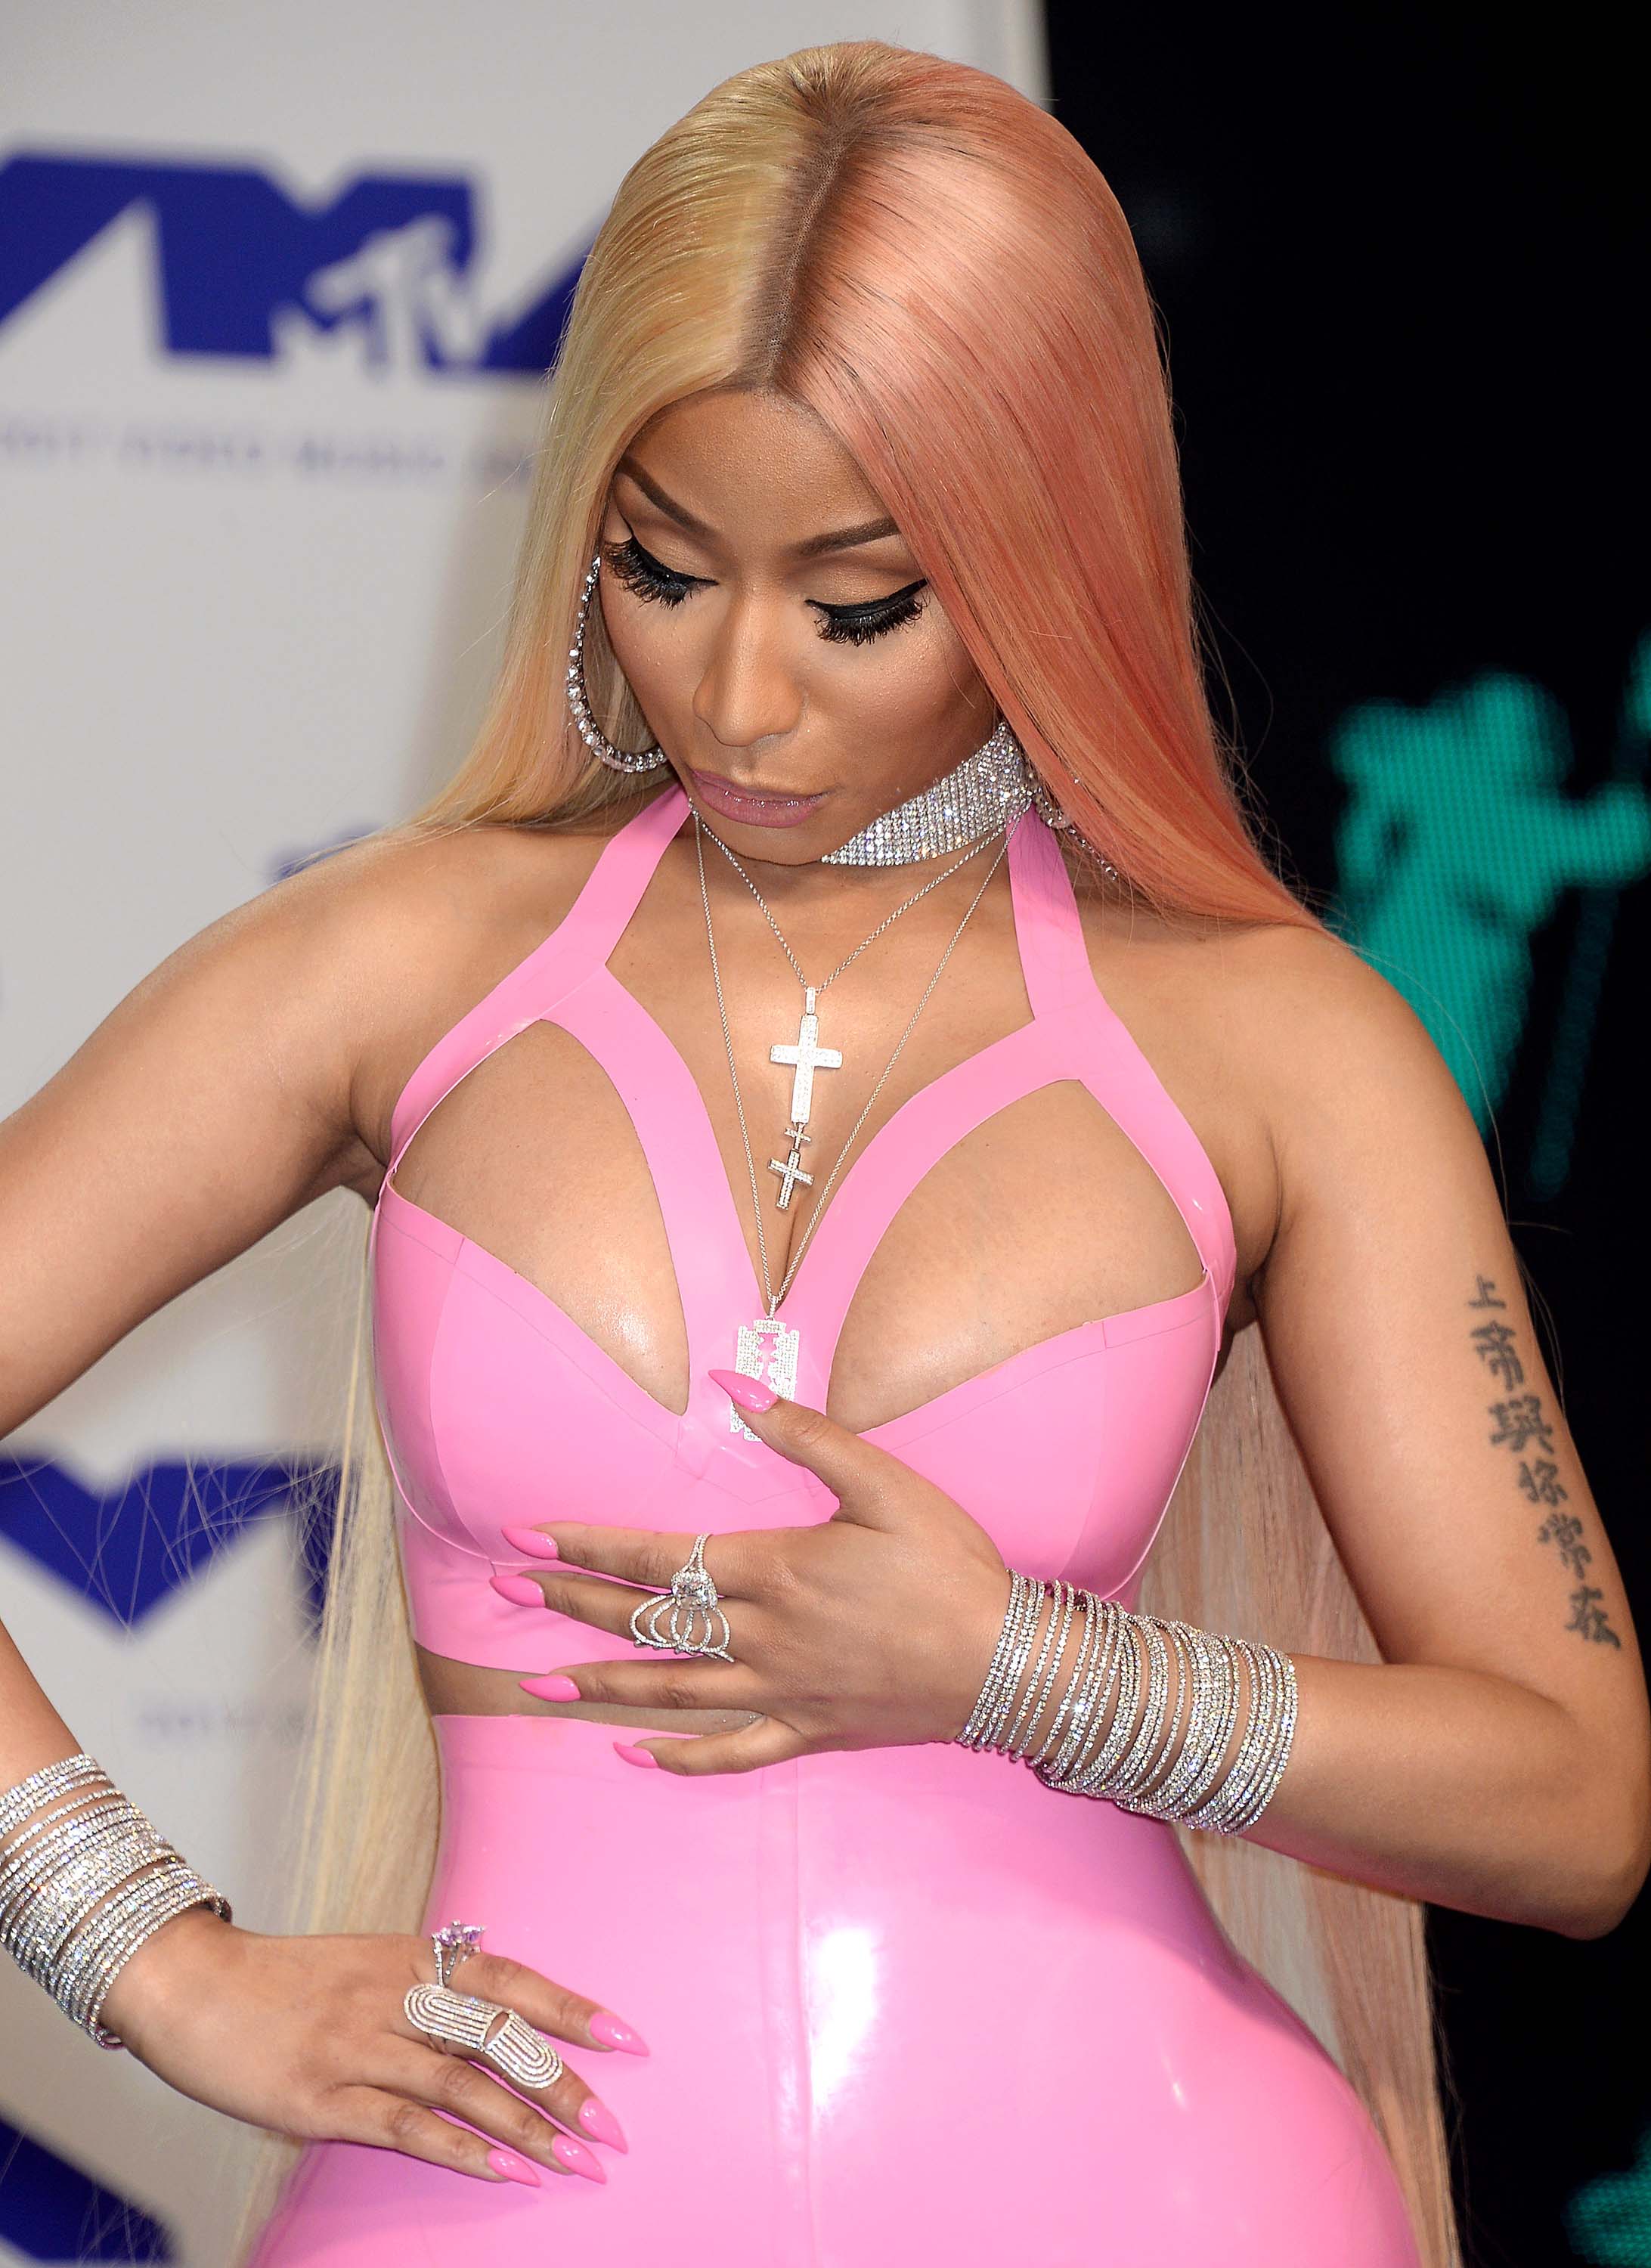 Nicki Minaj attends 2017 MTV Video Music Awards